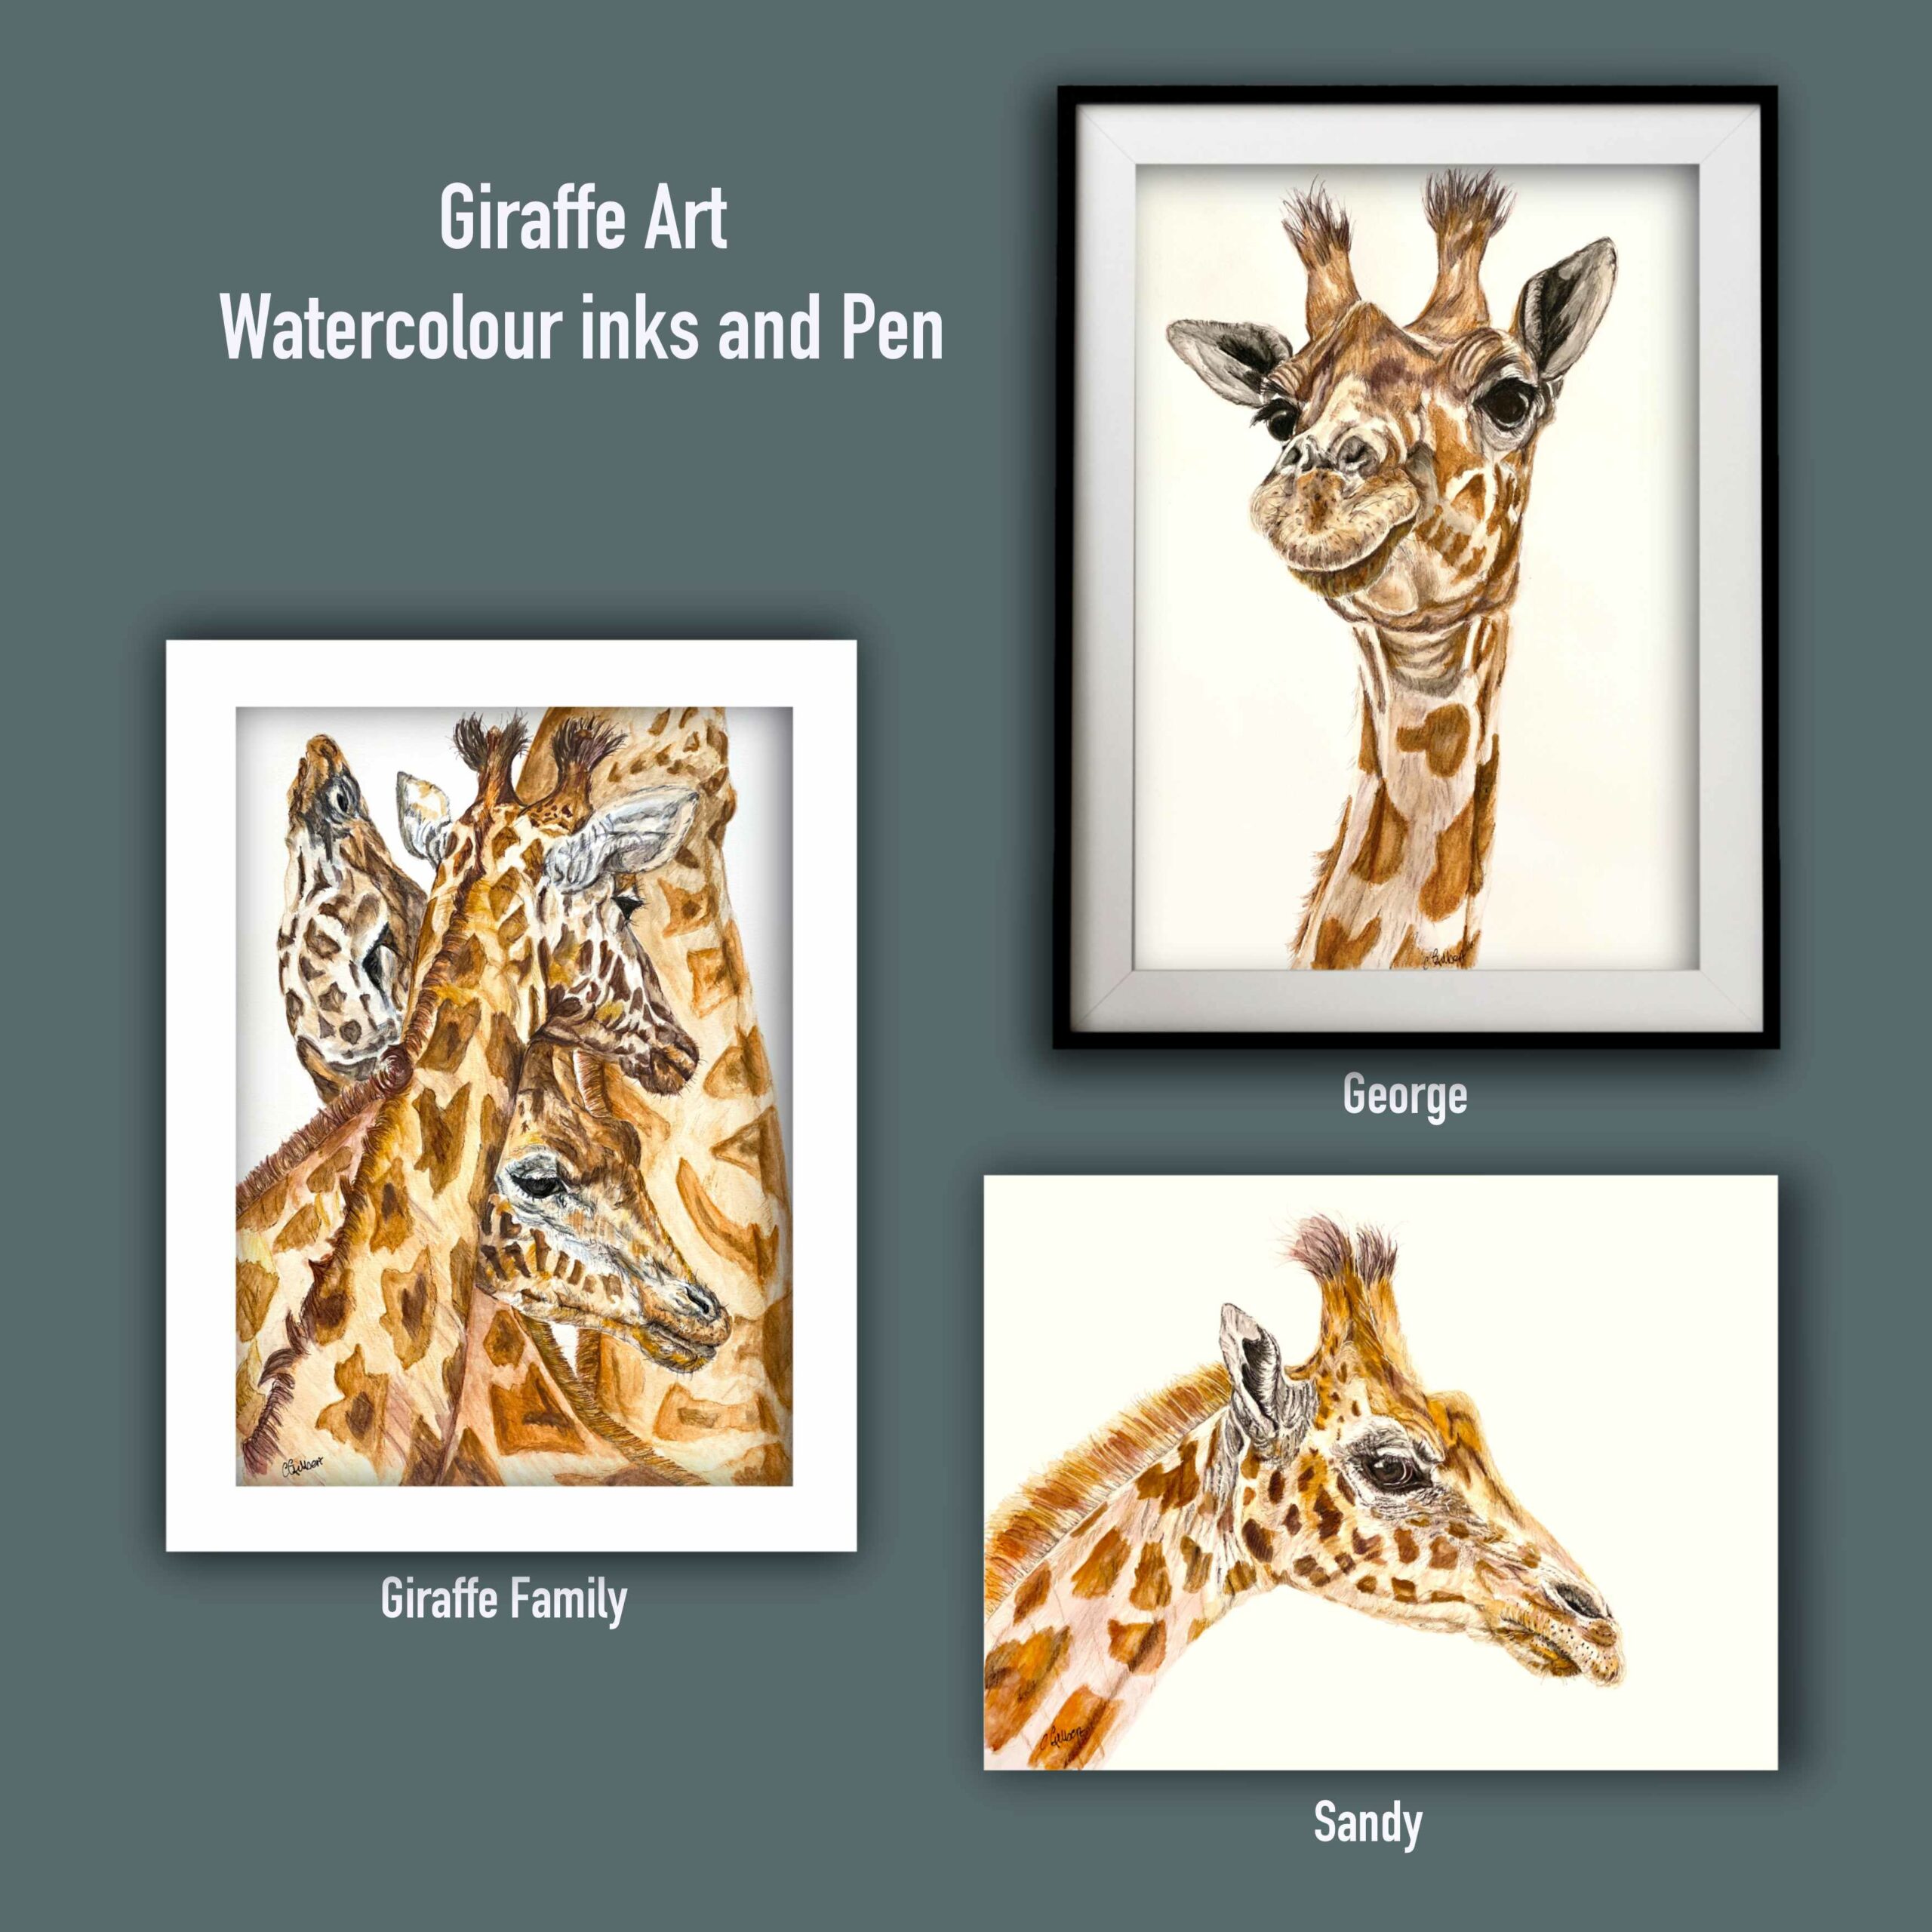 3 pieces of artwork 
George giraffe, Sandy Giraffe and family of 4 giraffe